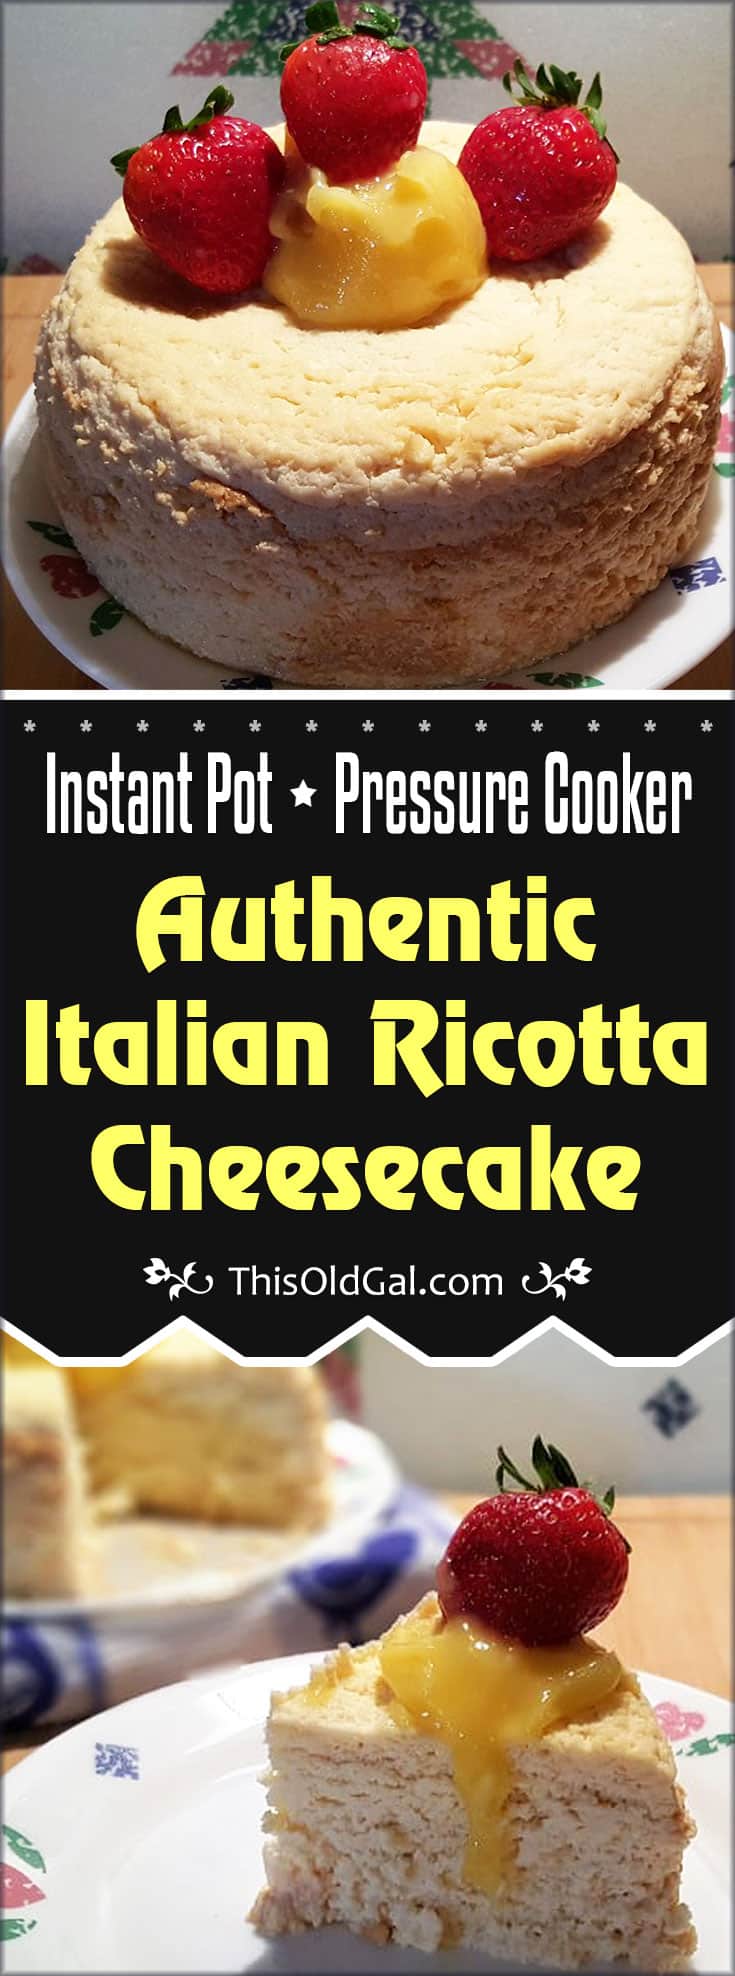 Pressure Cooker Authentic Italian Ricotta Cheesecake